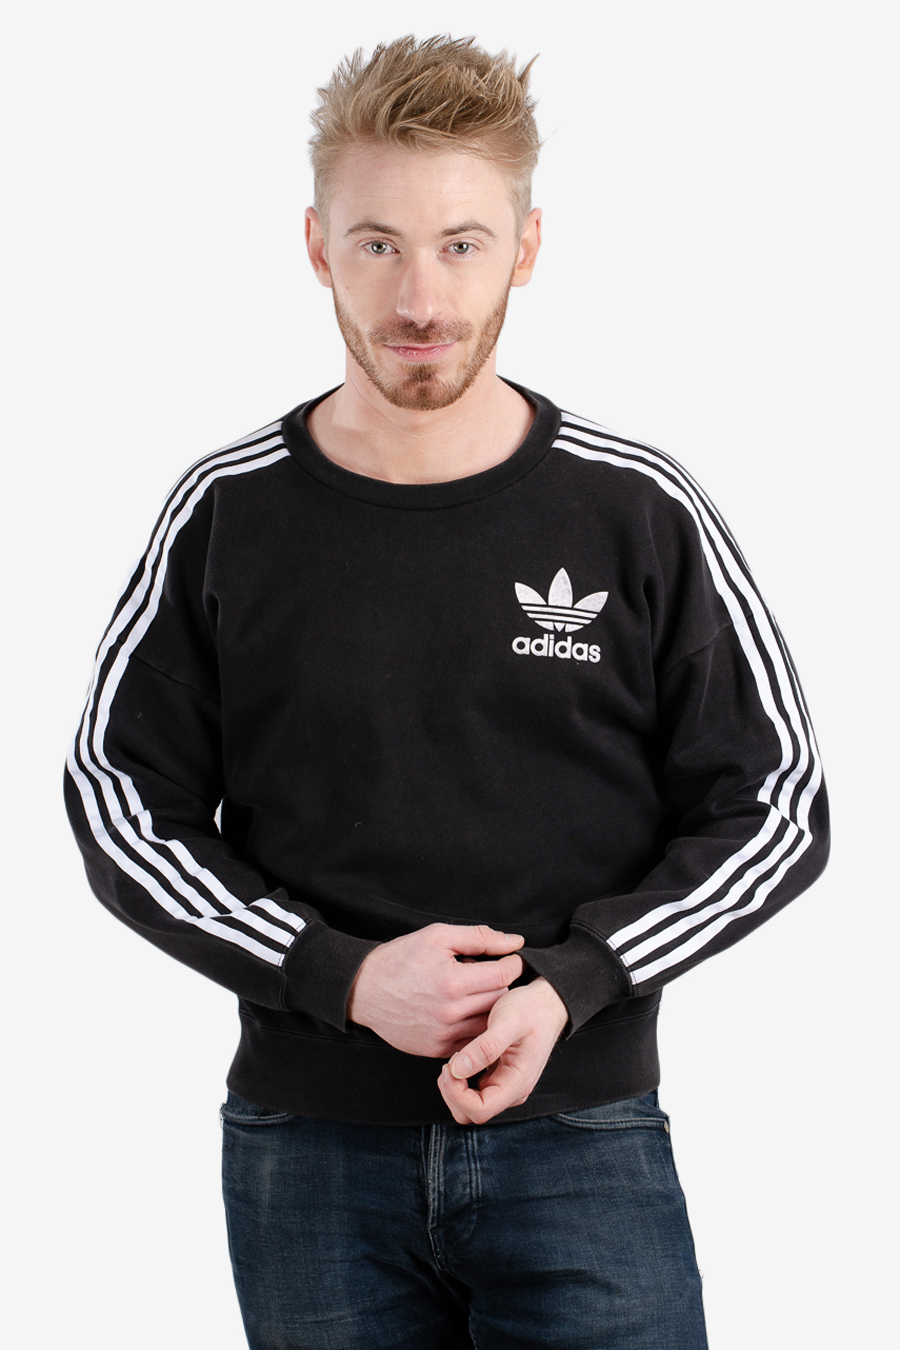 Retro Adidas sweatshirt